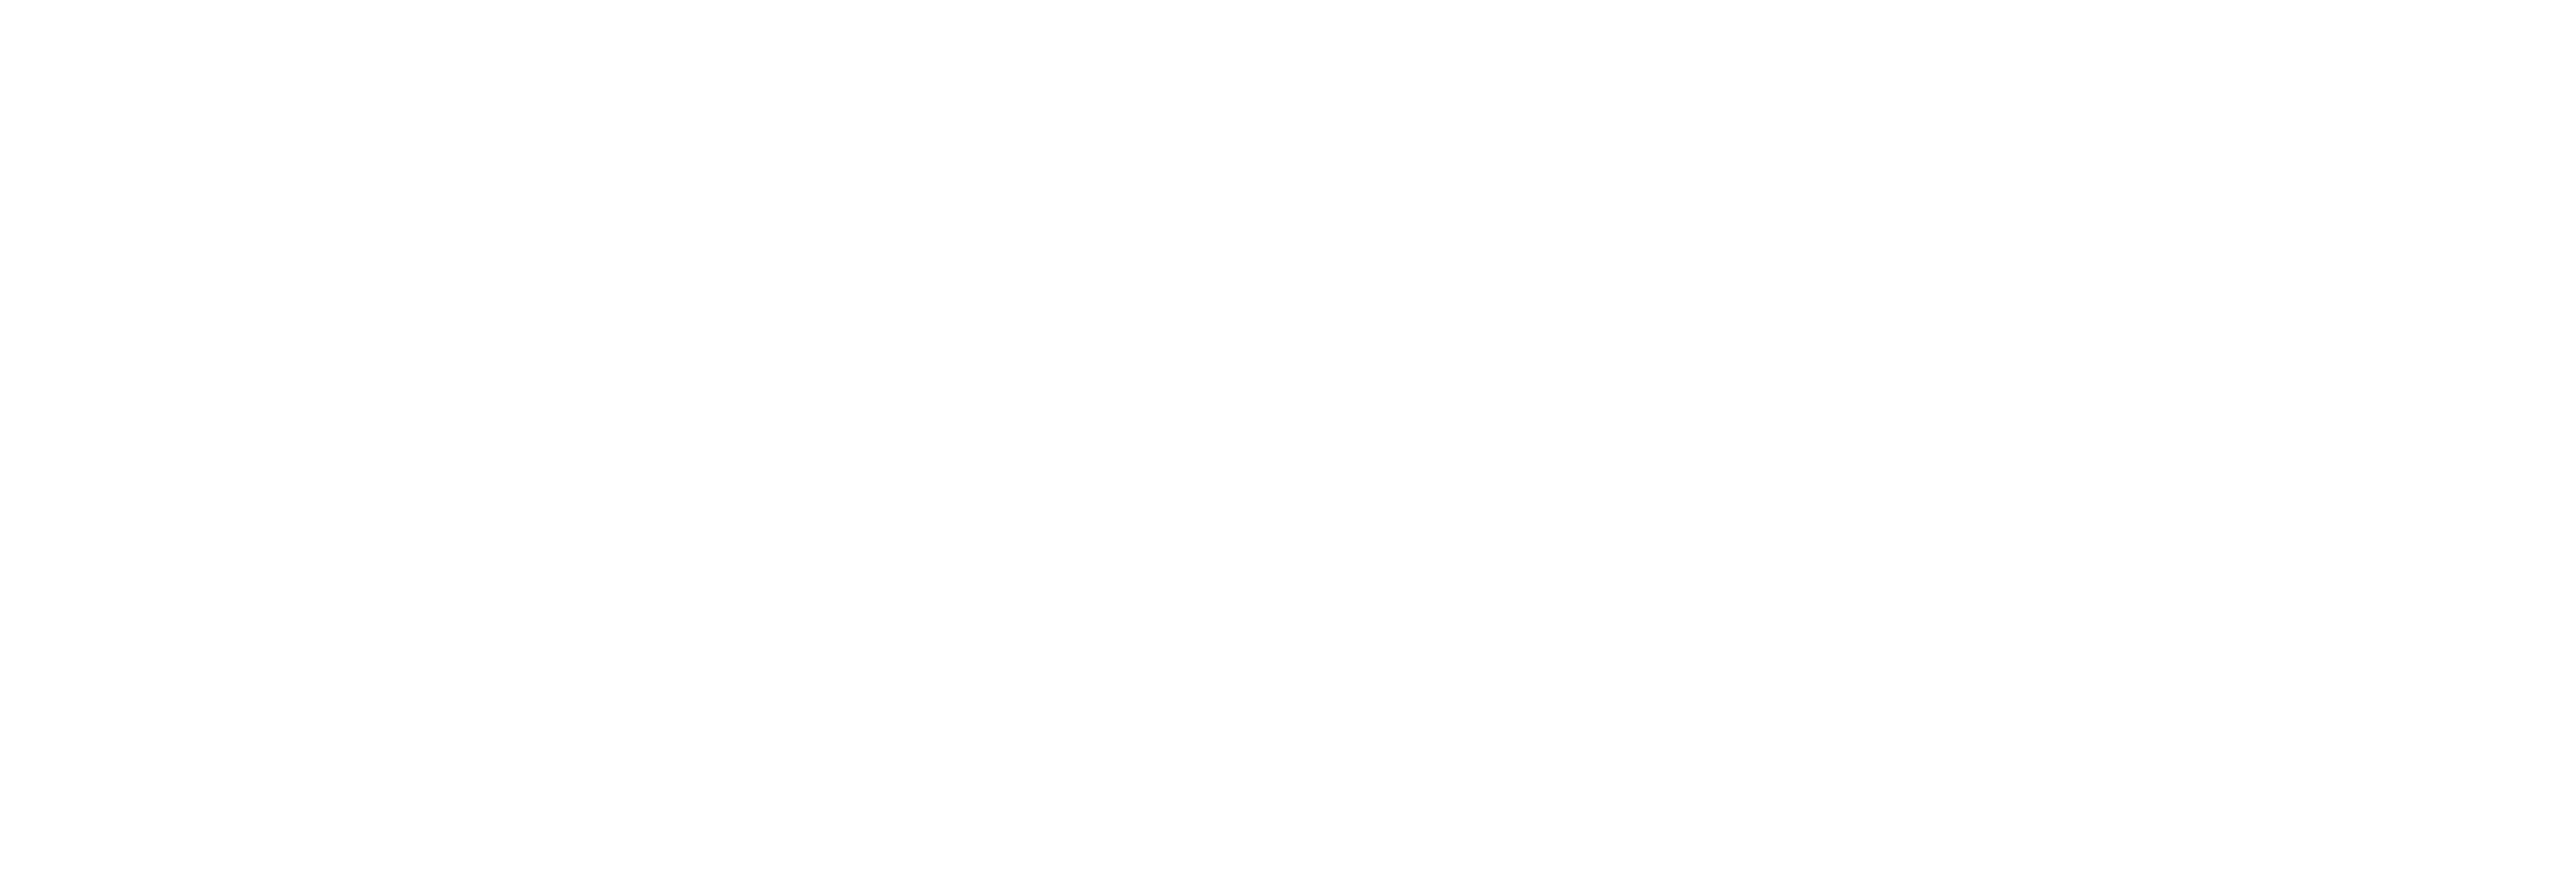 AniCura Kassel logo